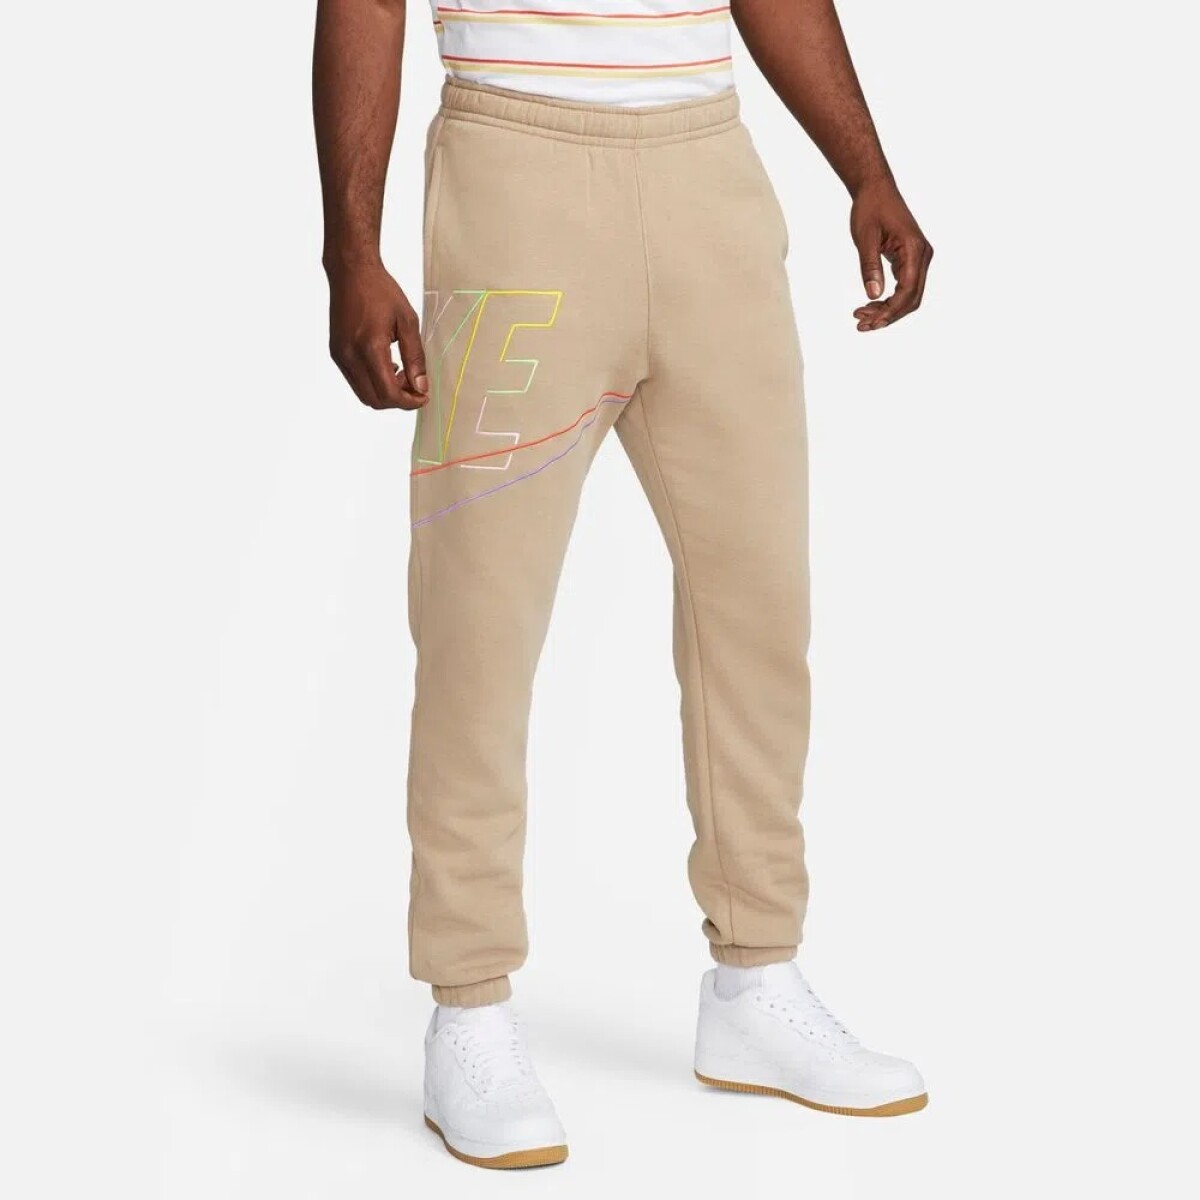 Pantalon Nike Moda Hombre Club+ BB Cf Mvf Khaki - S/C 